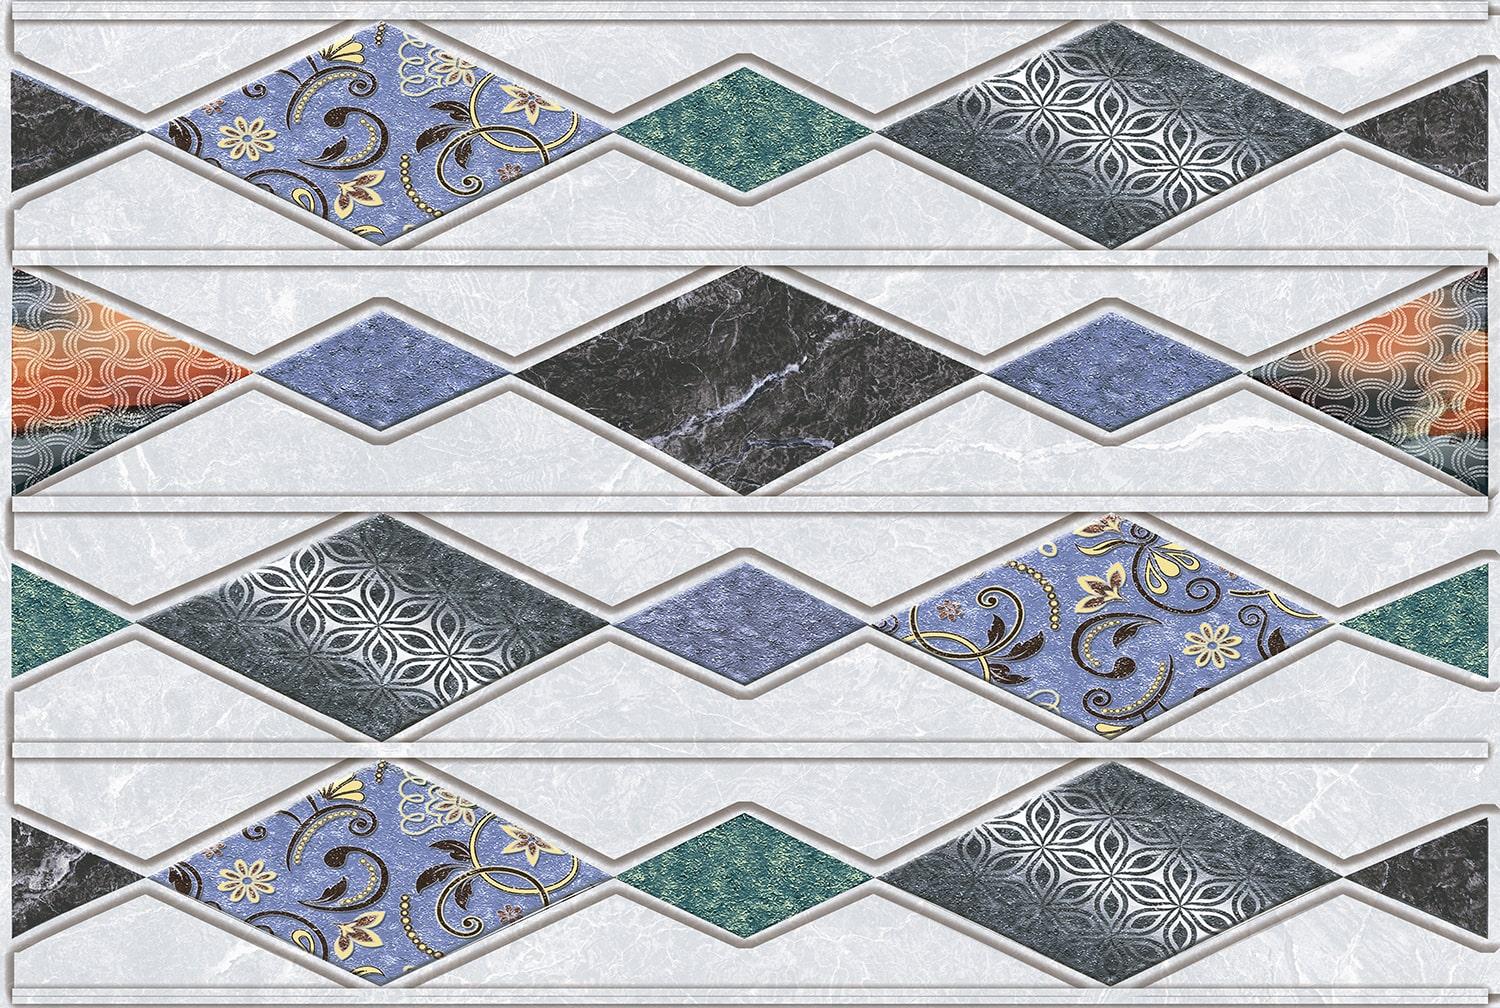 Super Glossy Tiles for Bathroom Tiles, Kitchen Tiles, Accent Tiles